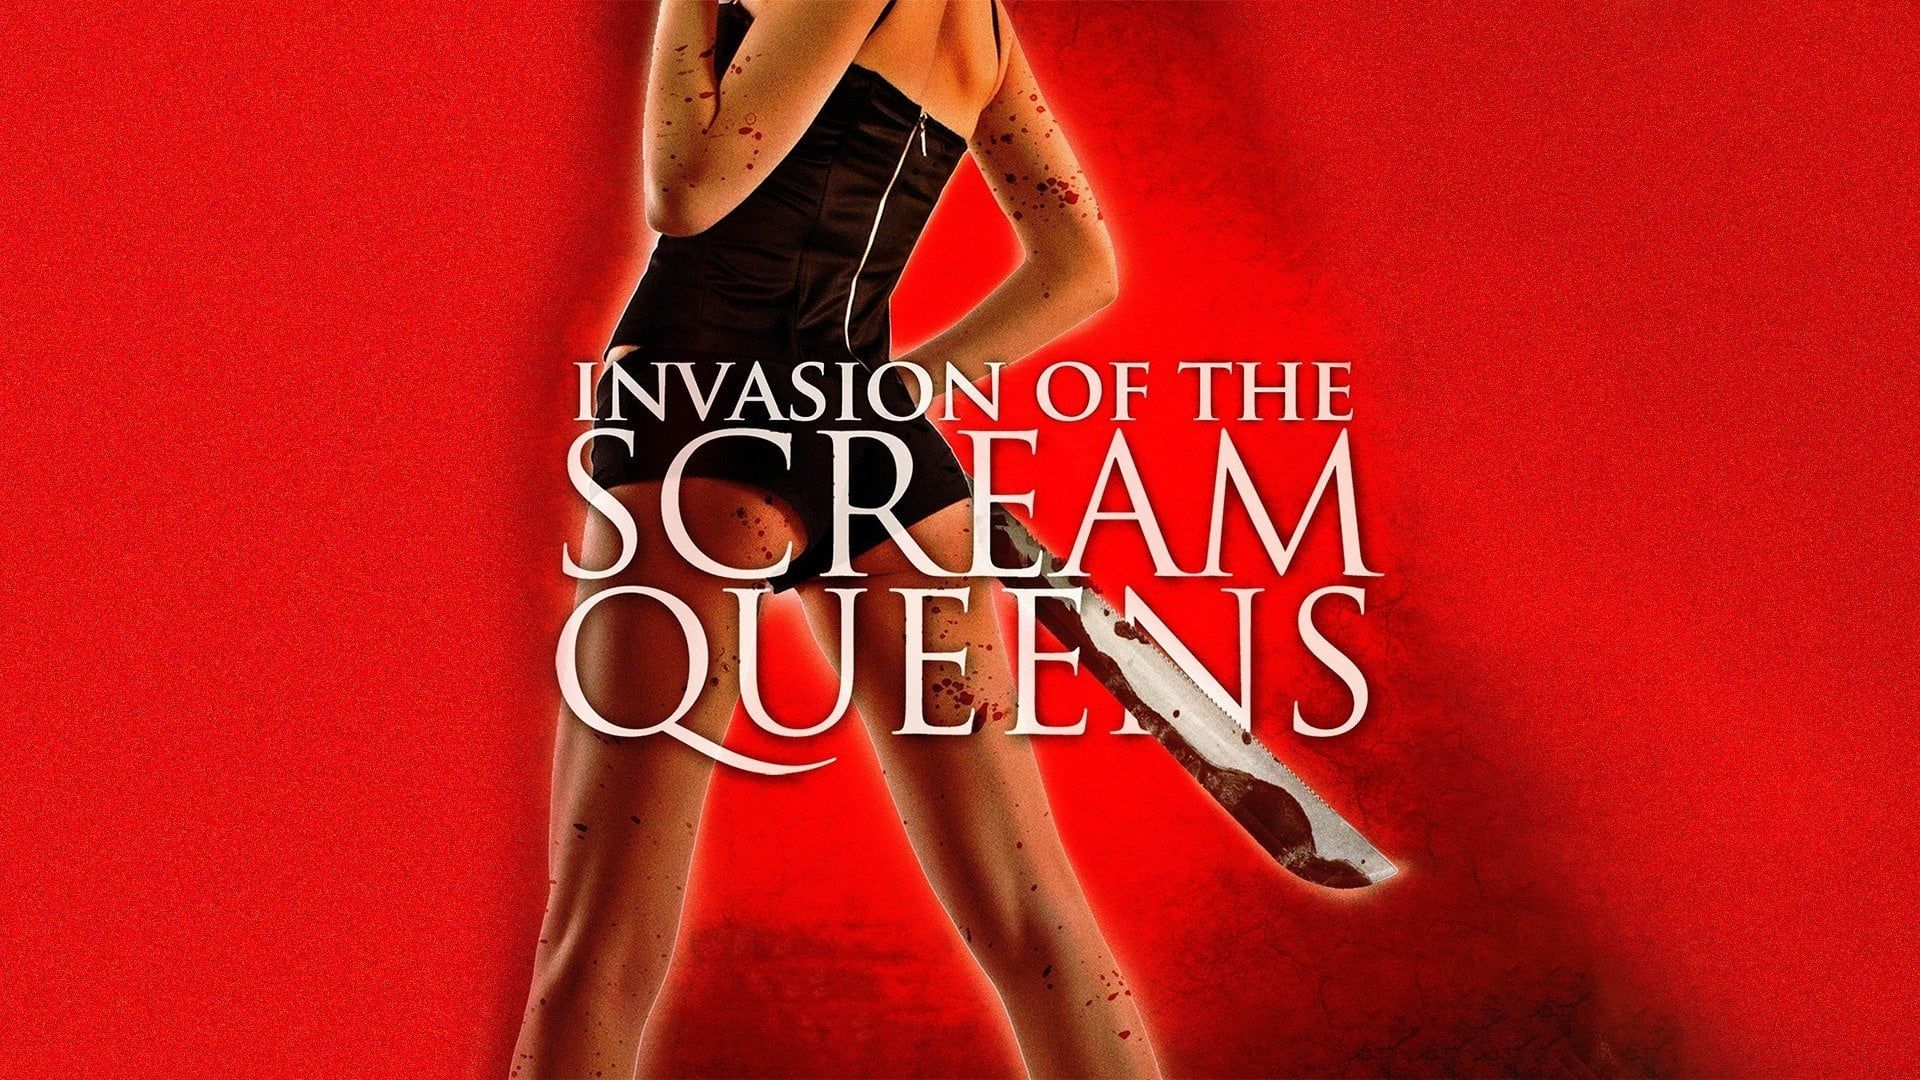 Invasion of the Scream Queens background